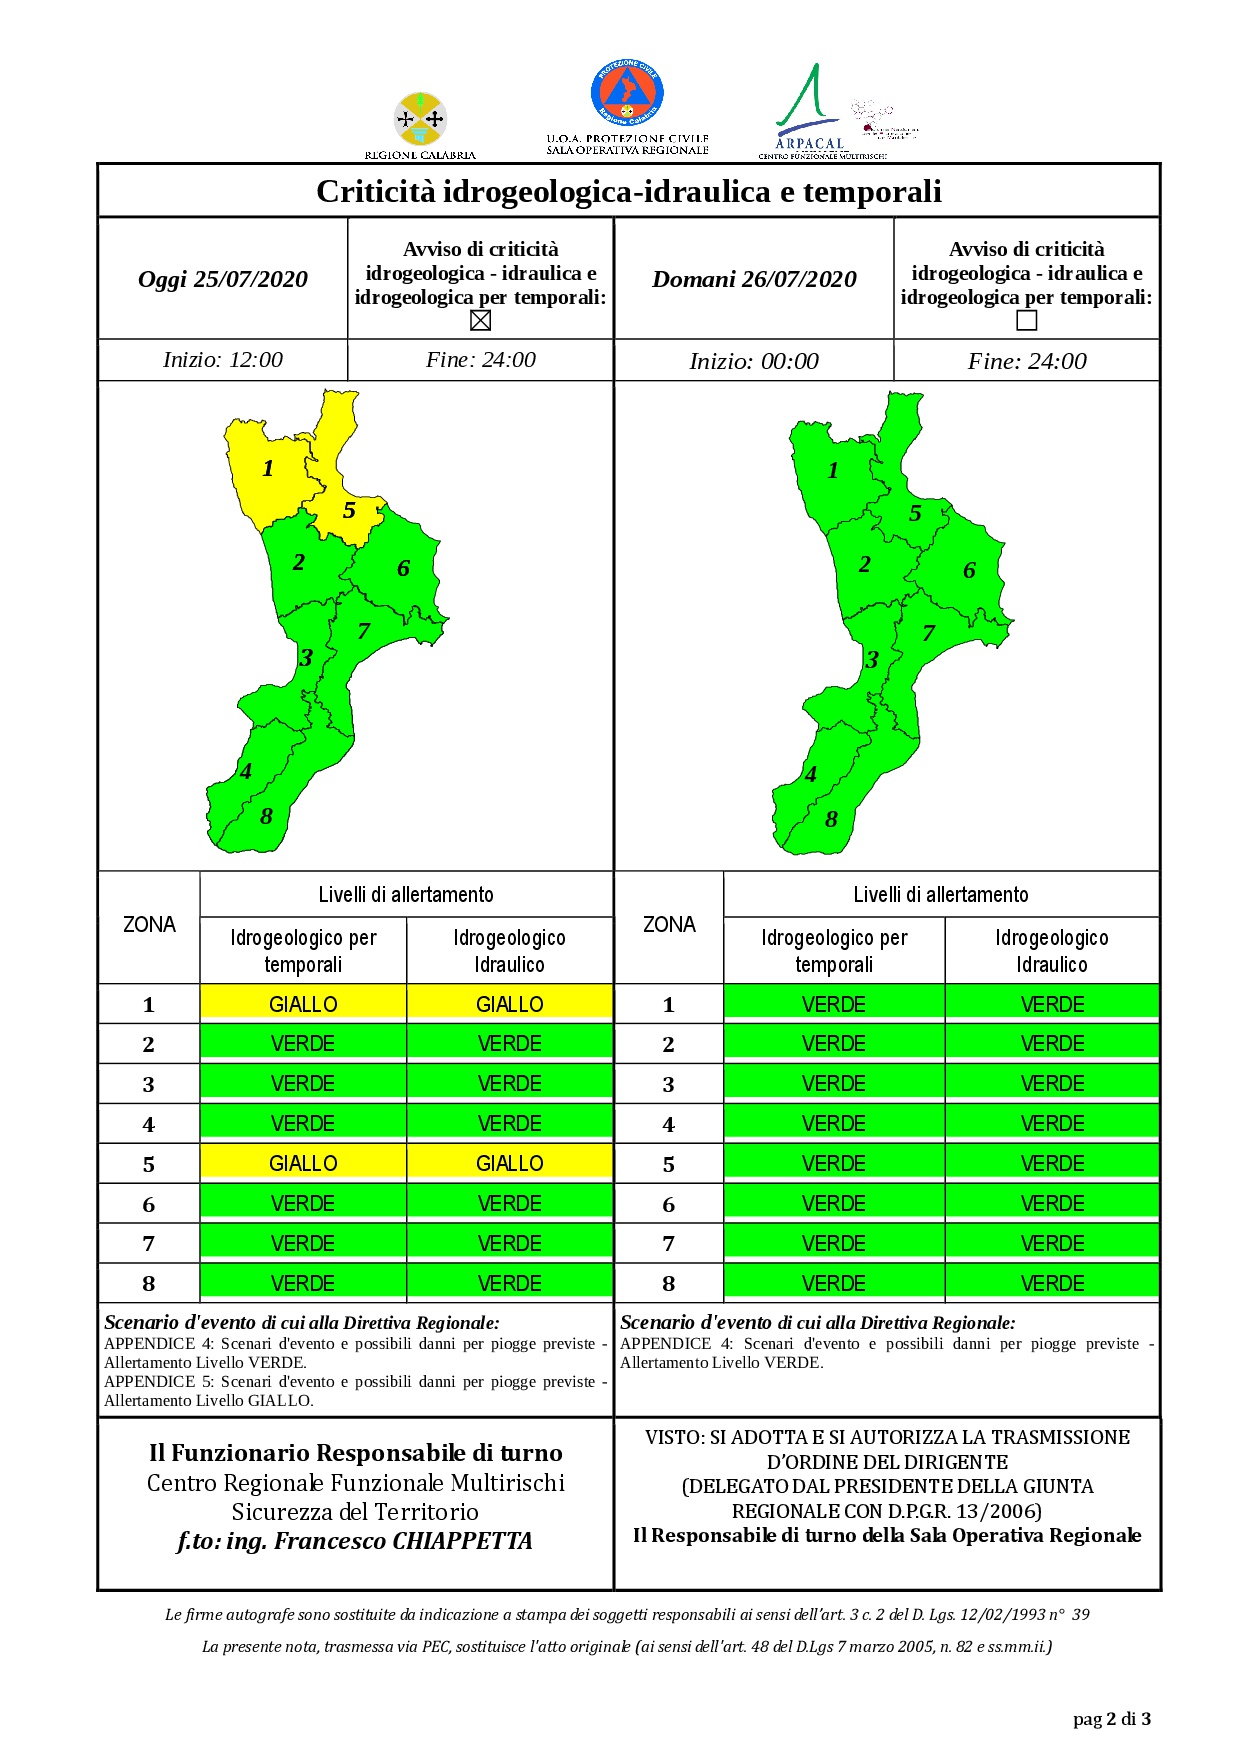 Criticità idrogeologica-idraulica e temporali in Calabria 25-07-2020